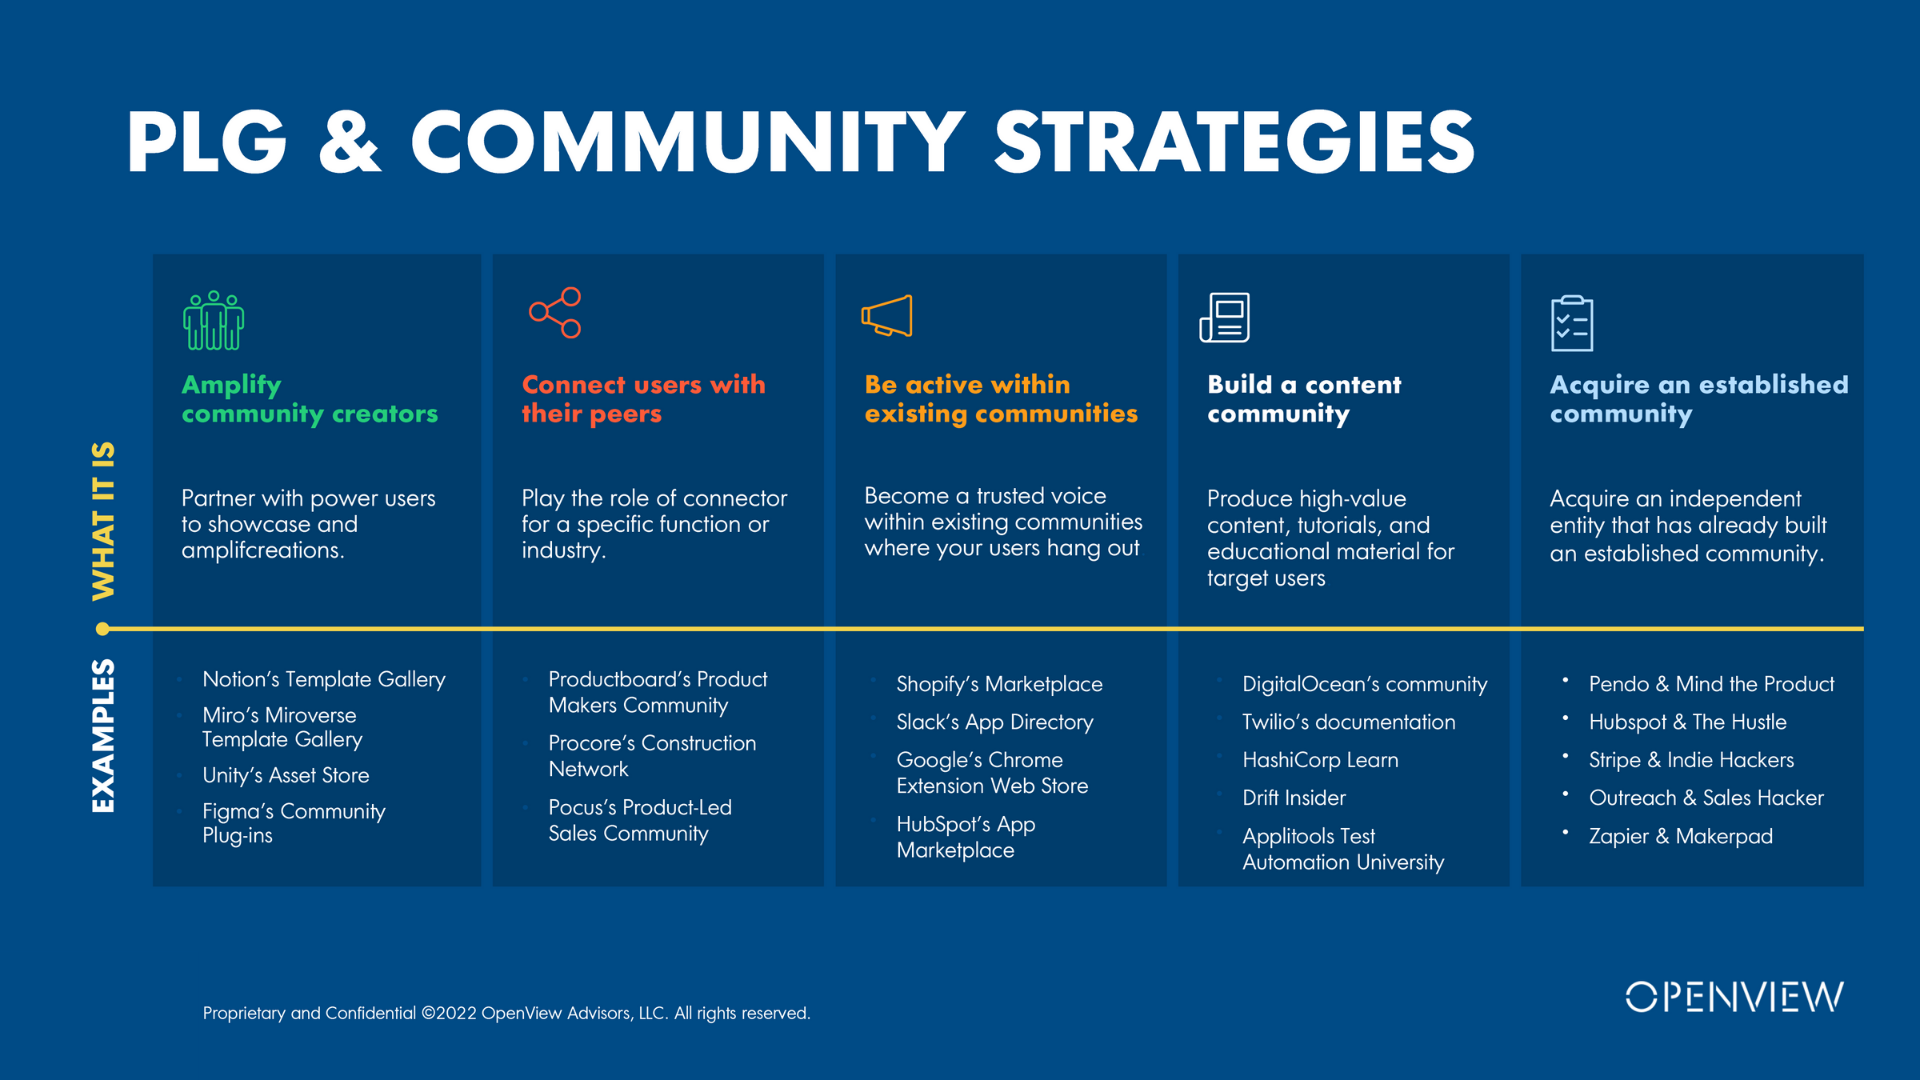 PLG & Community Strategies